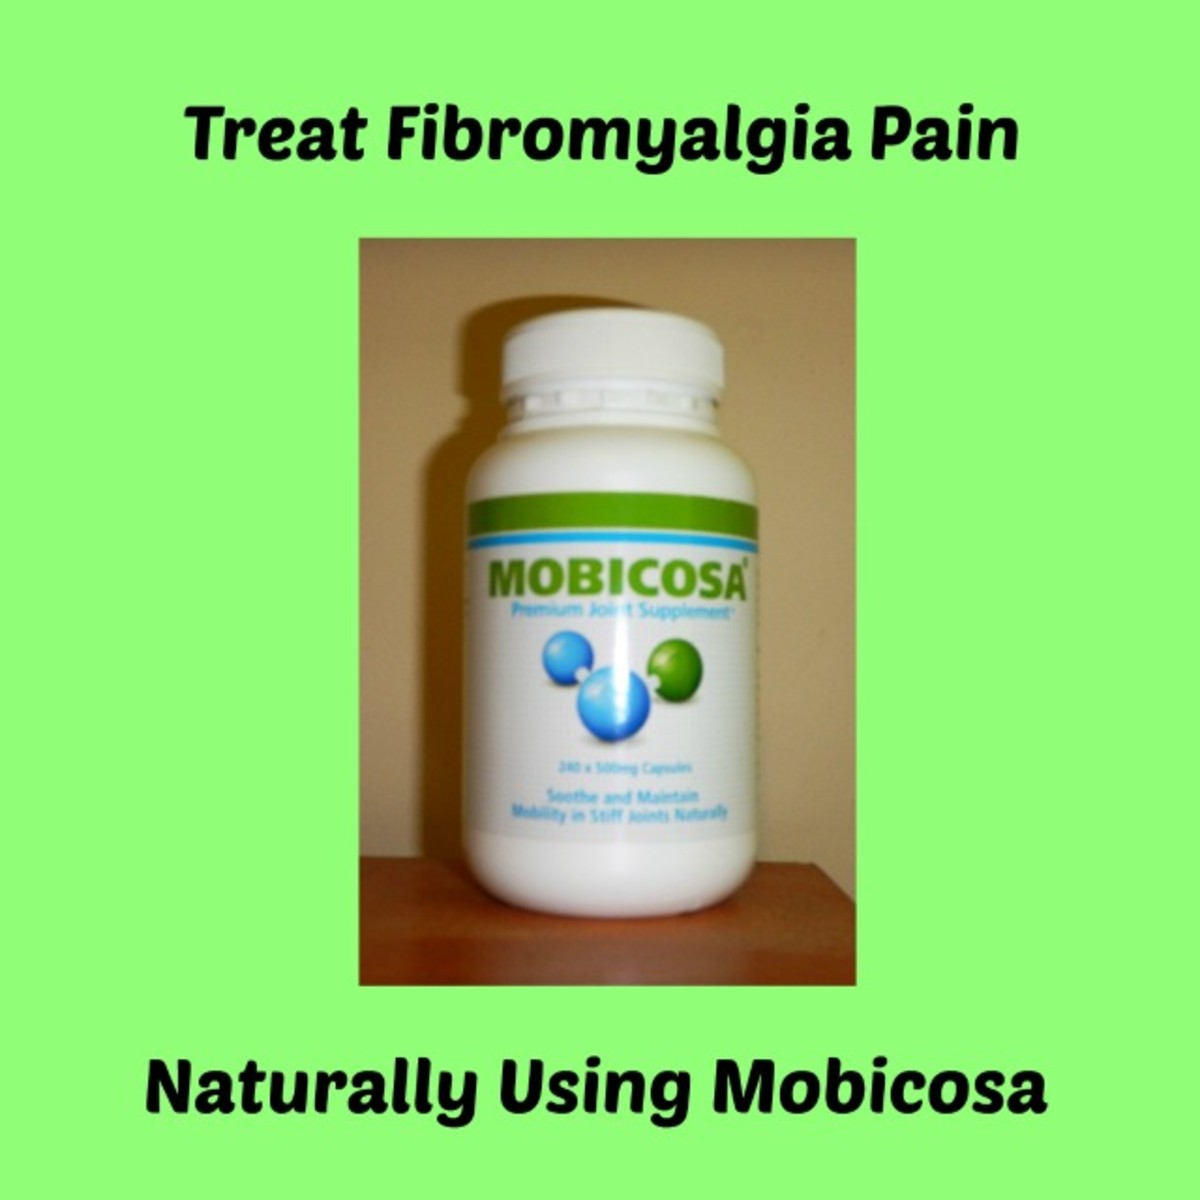 Treating Fibromyalgia Pain Naturally